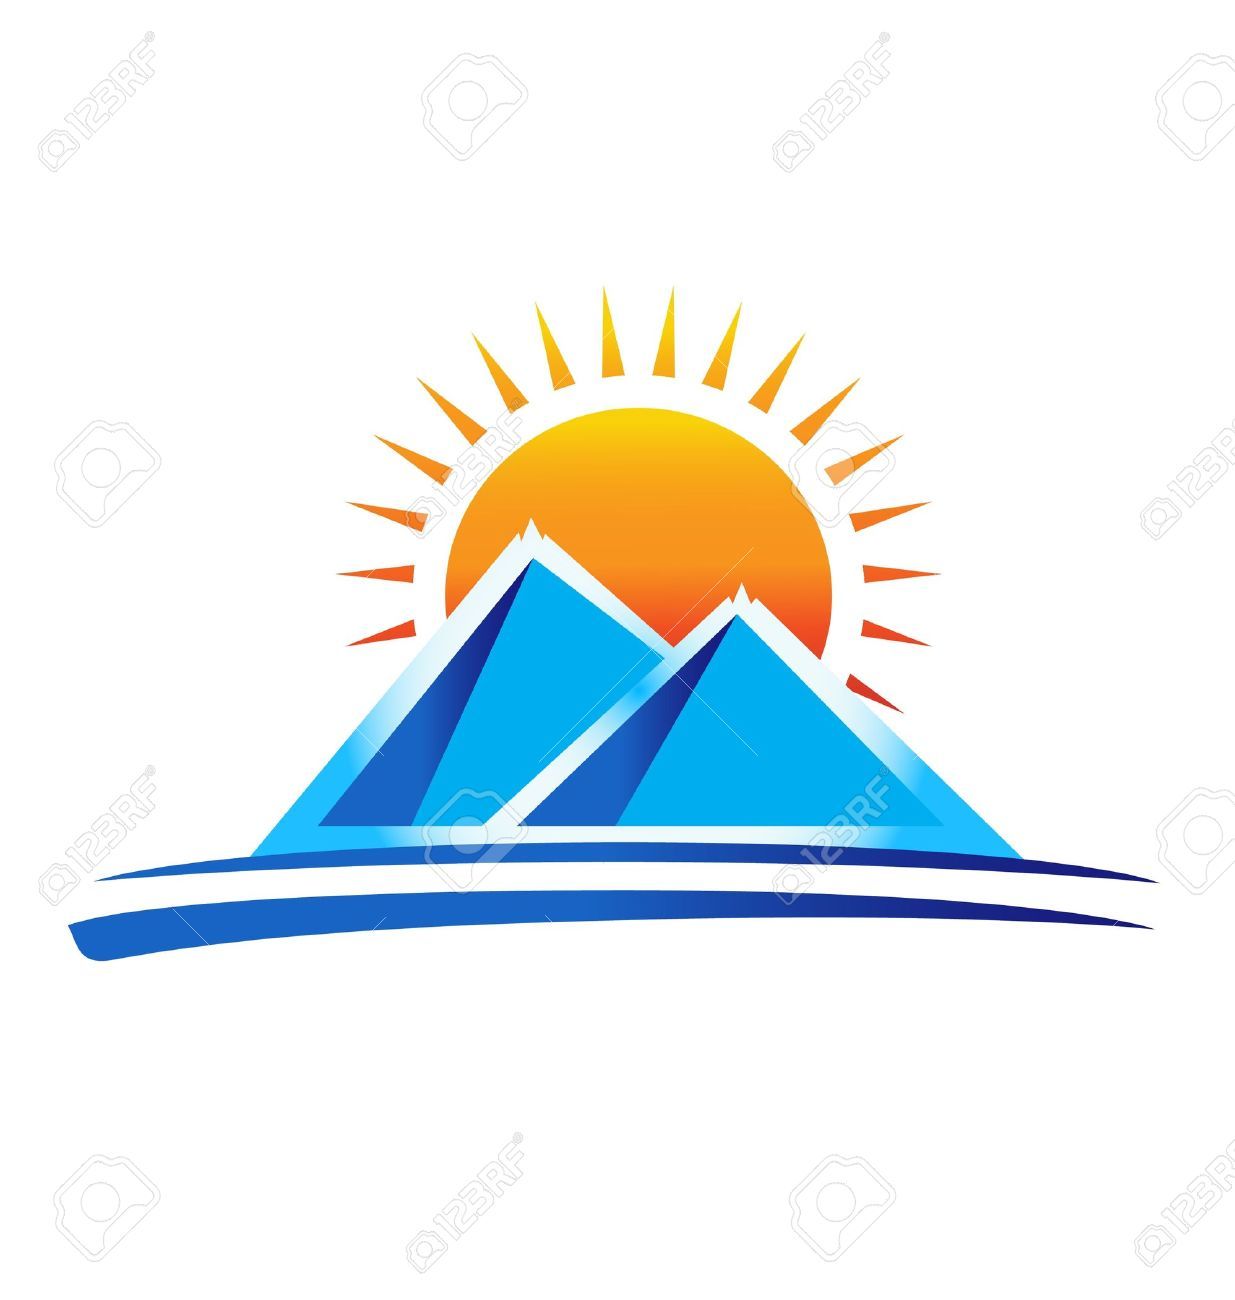 Mountain with sun clipart